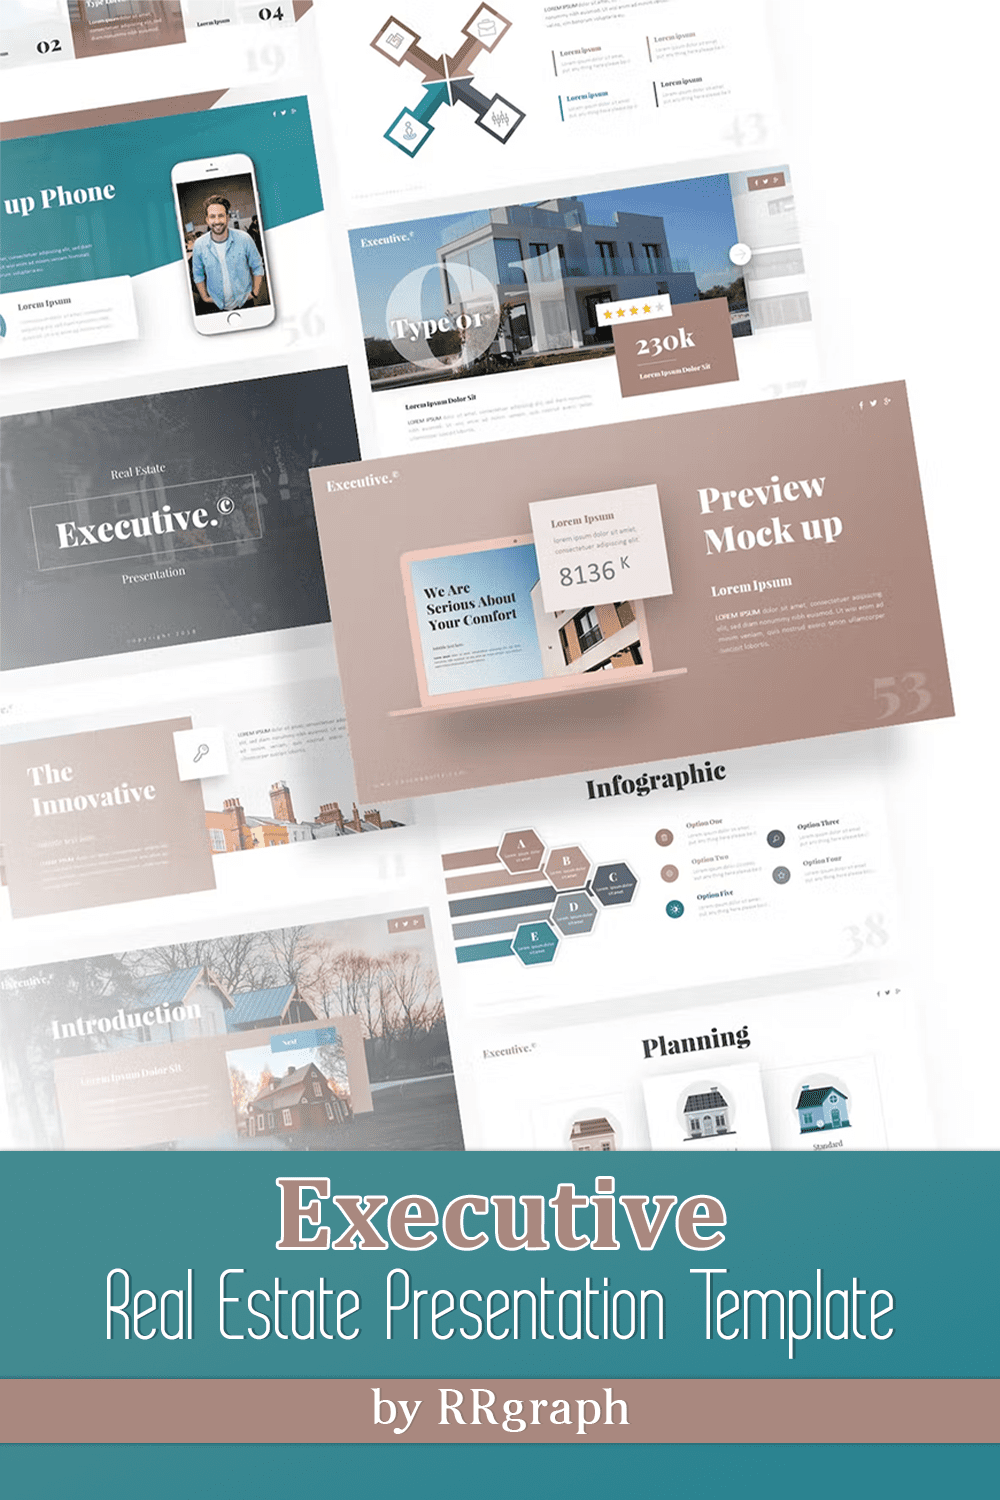 Executive - Real Estate Presentation Template - Pinterest.